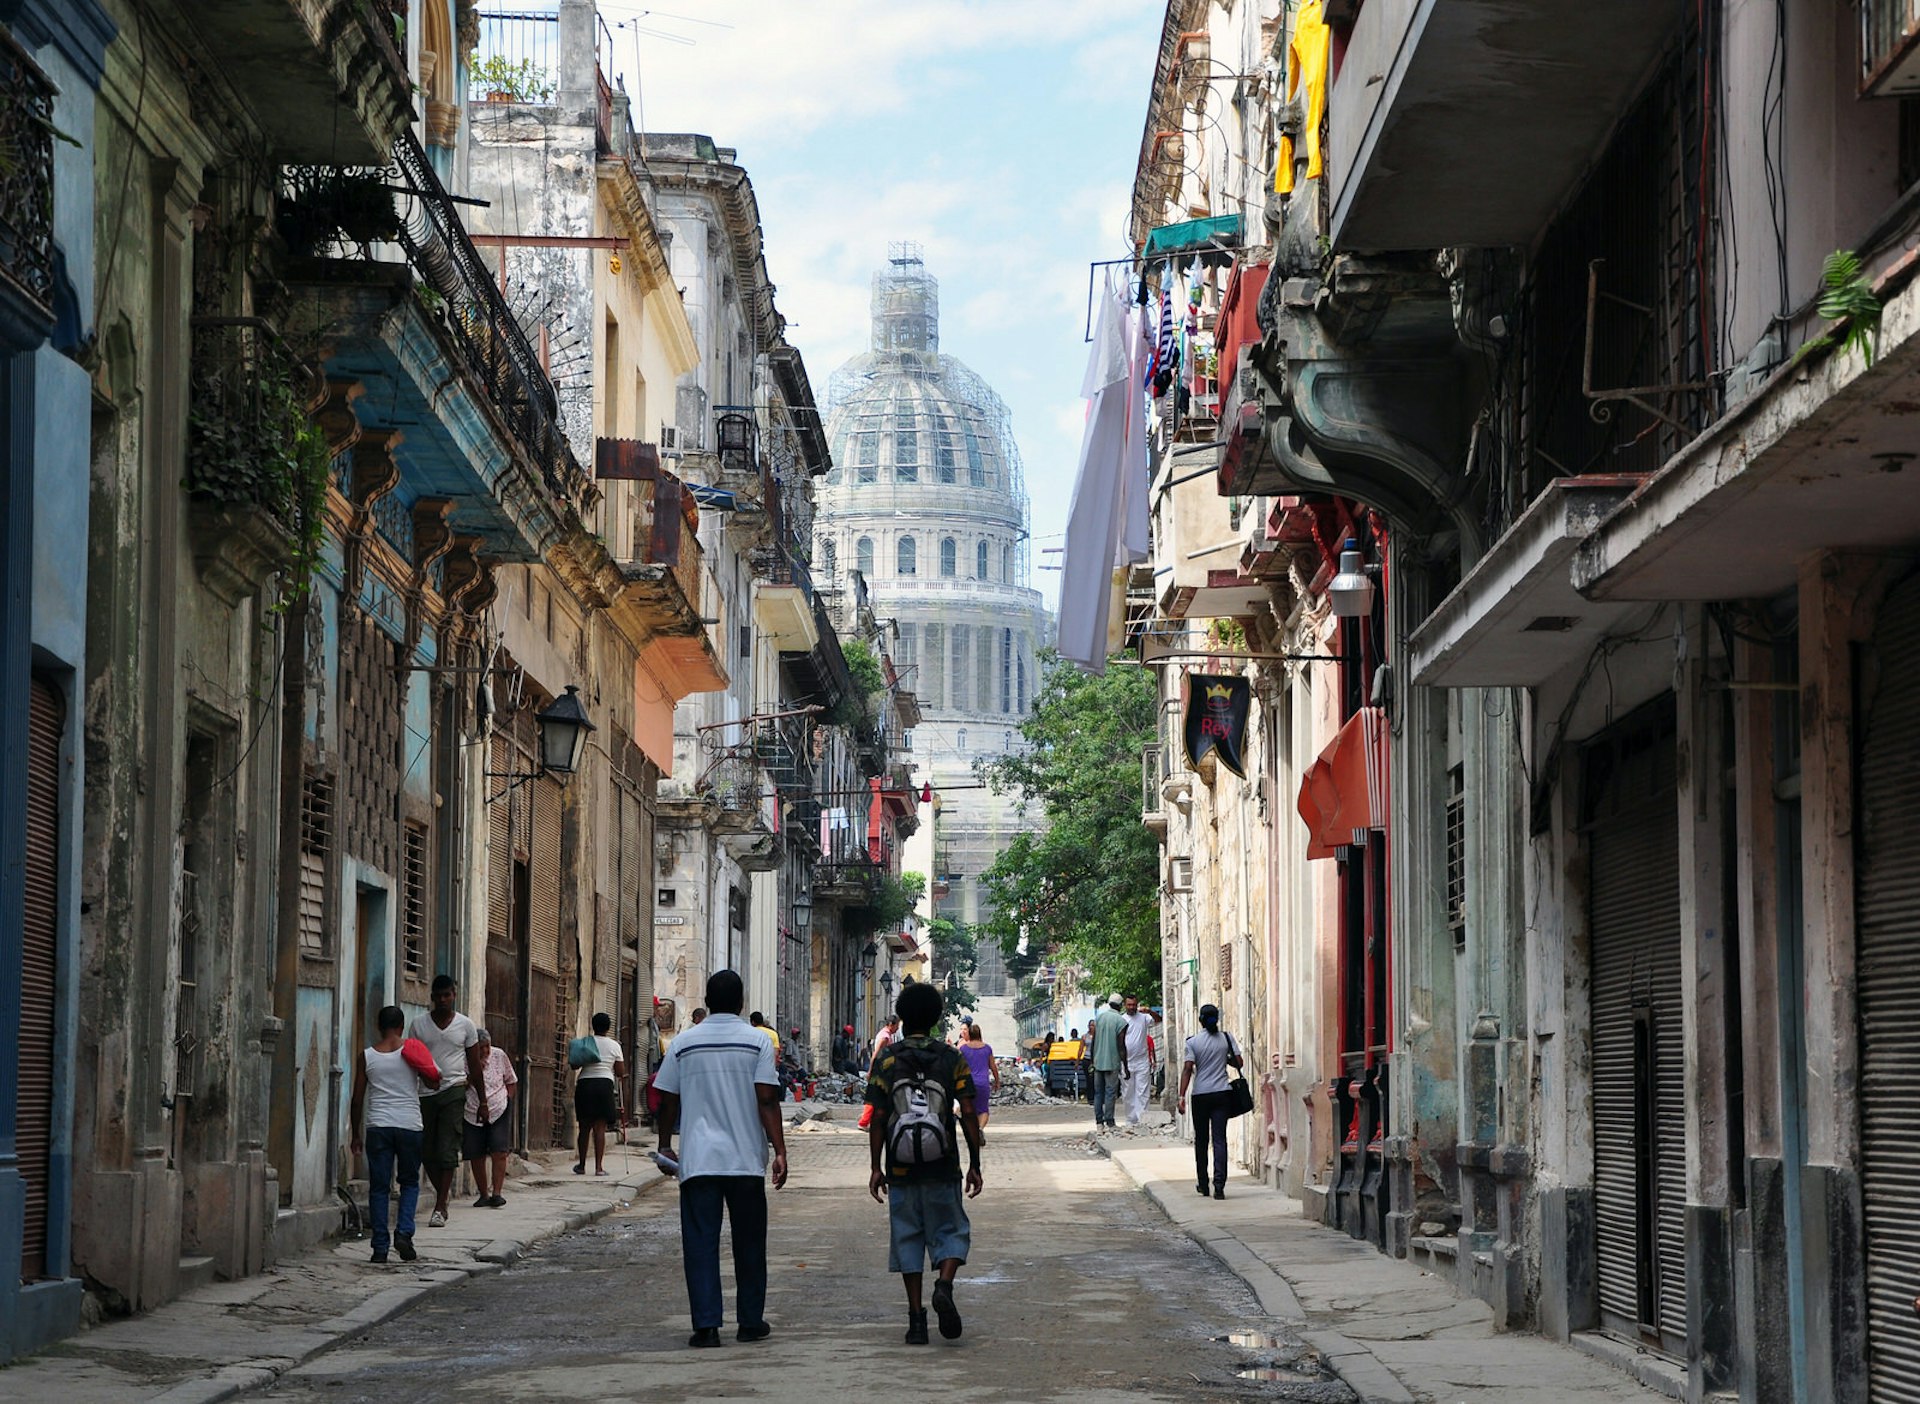 El Capitolio peeks through a gap in the winding streets of Havana © Halbag / CC BY 2.0